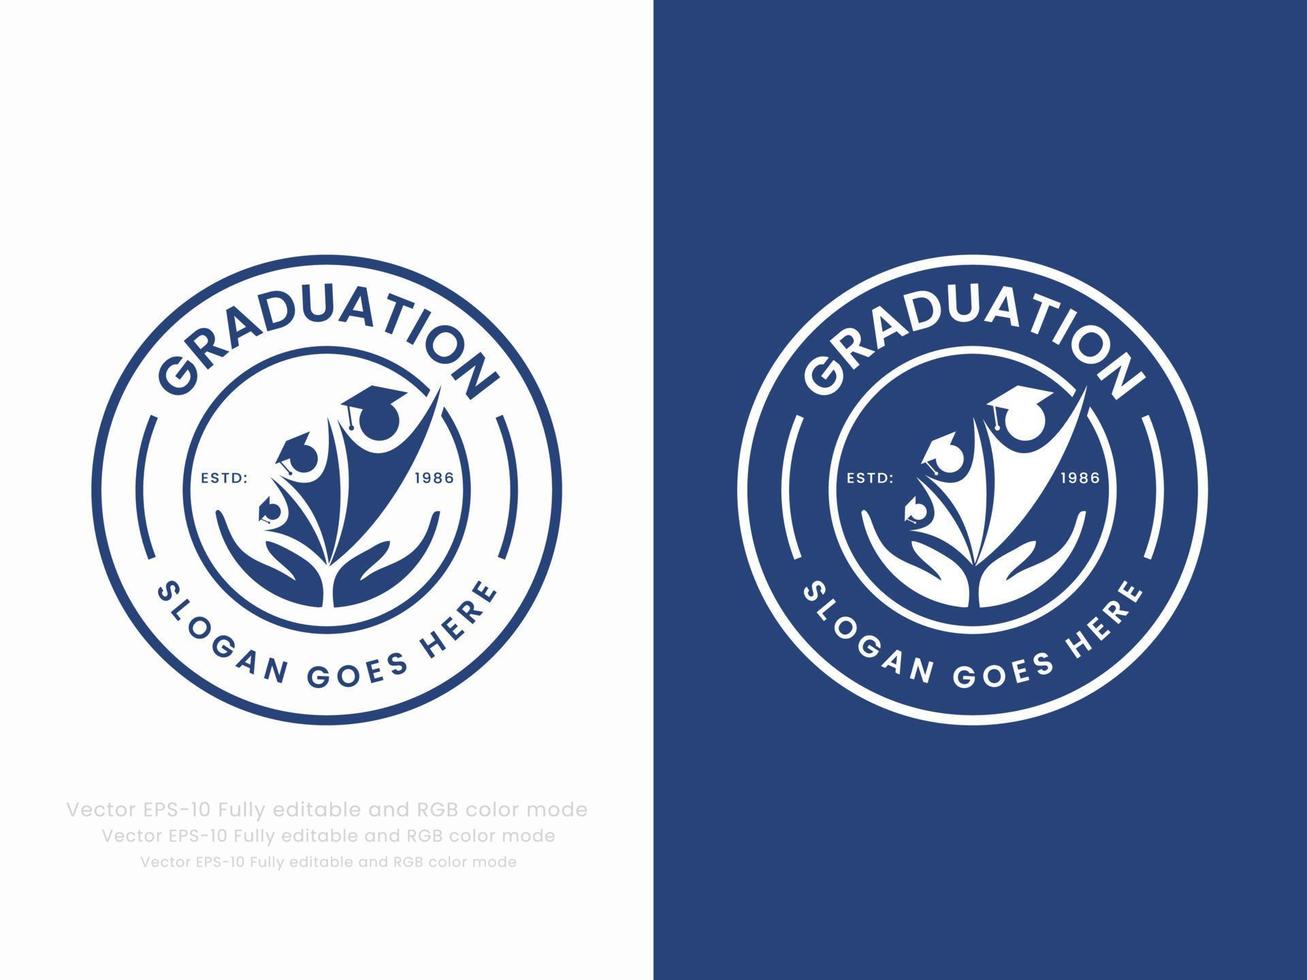 Graduation or education logo vector